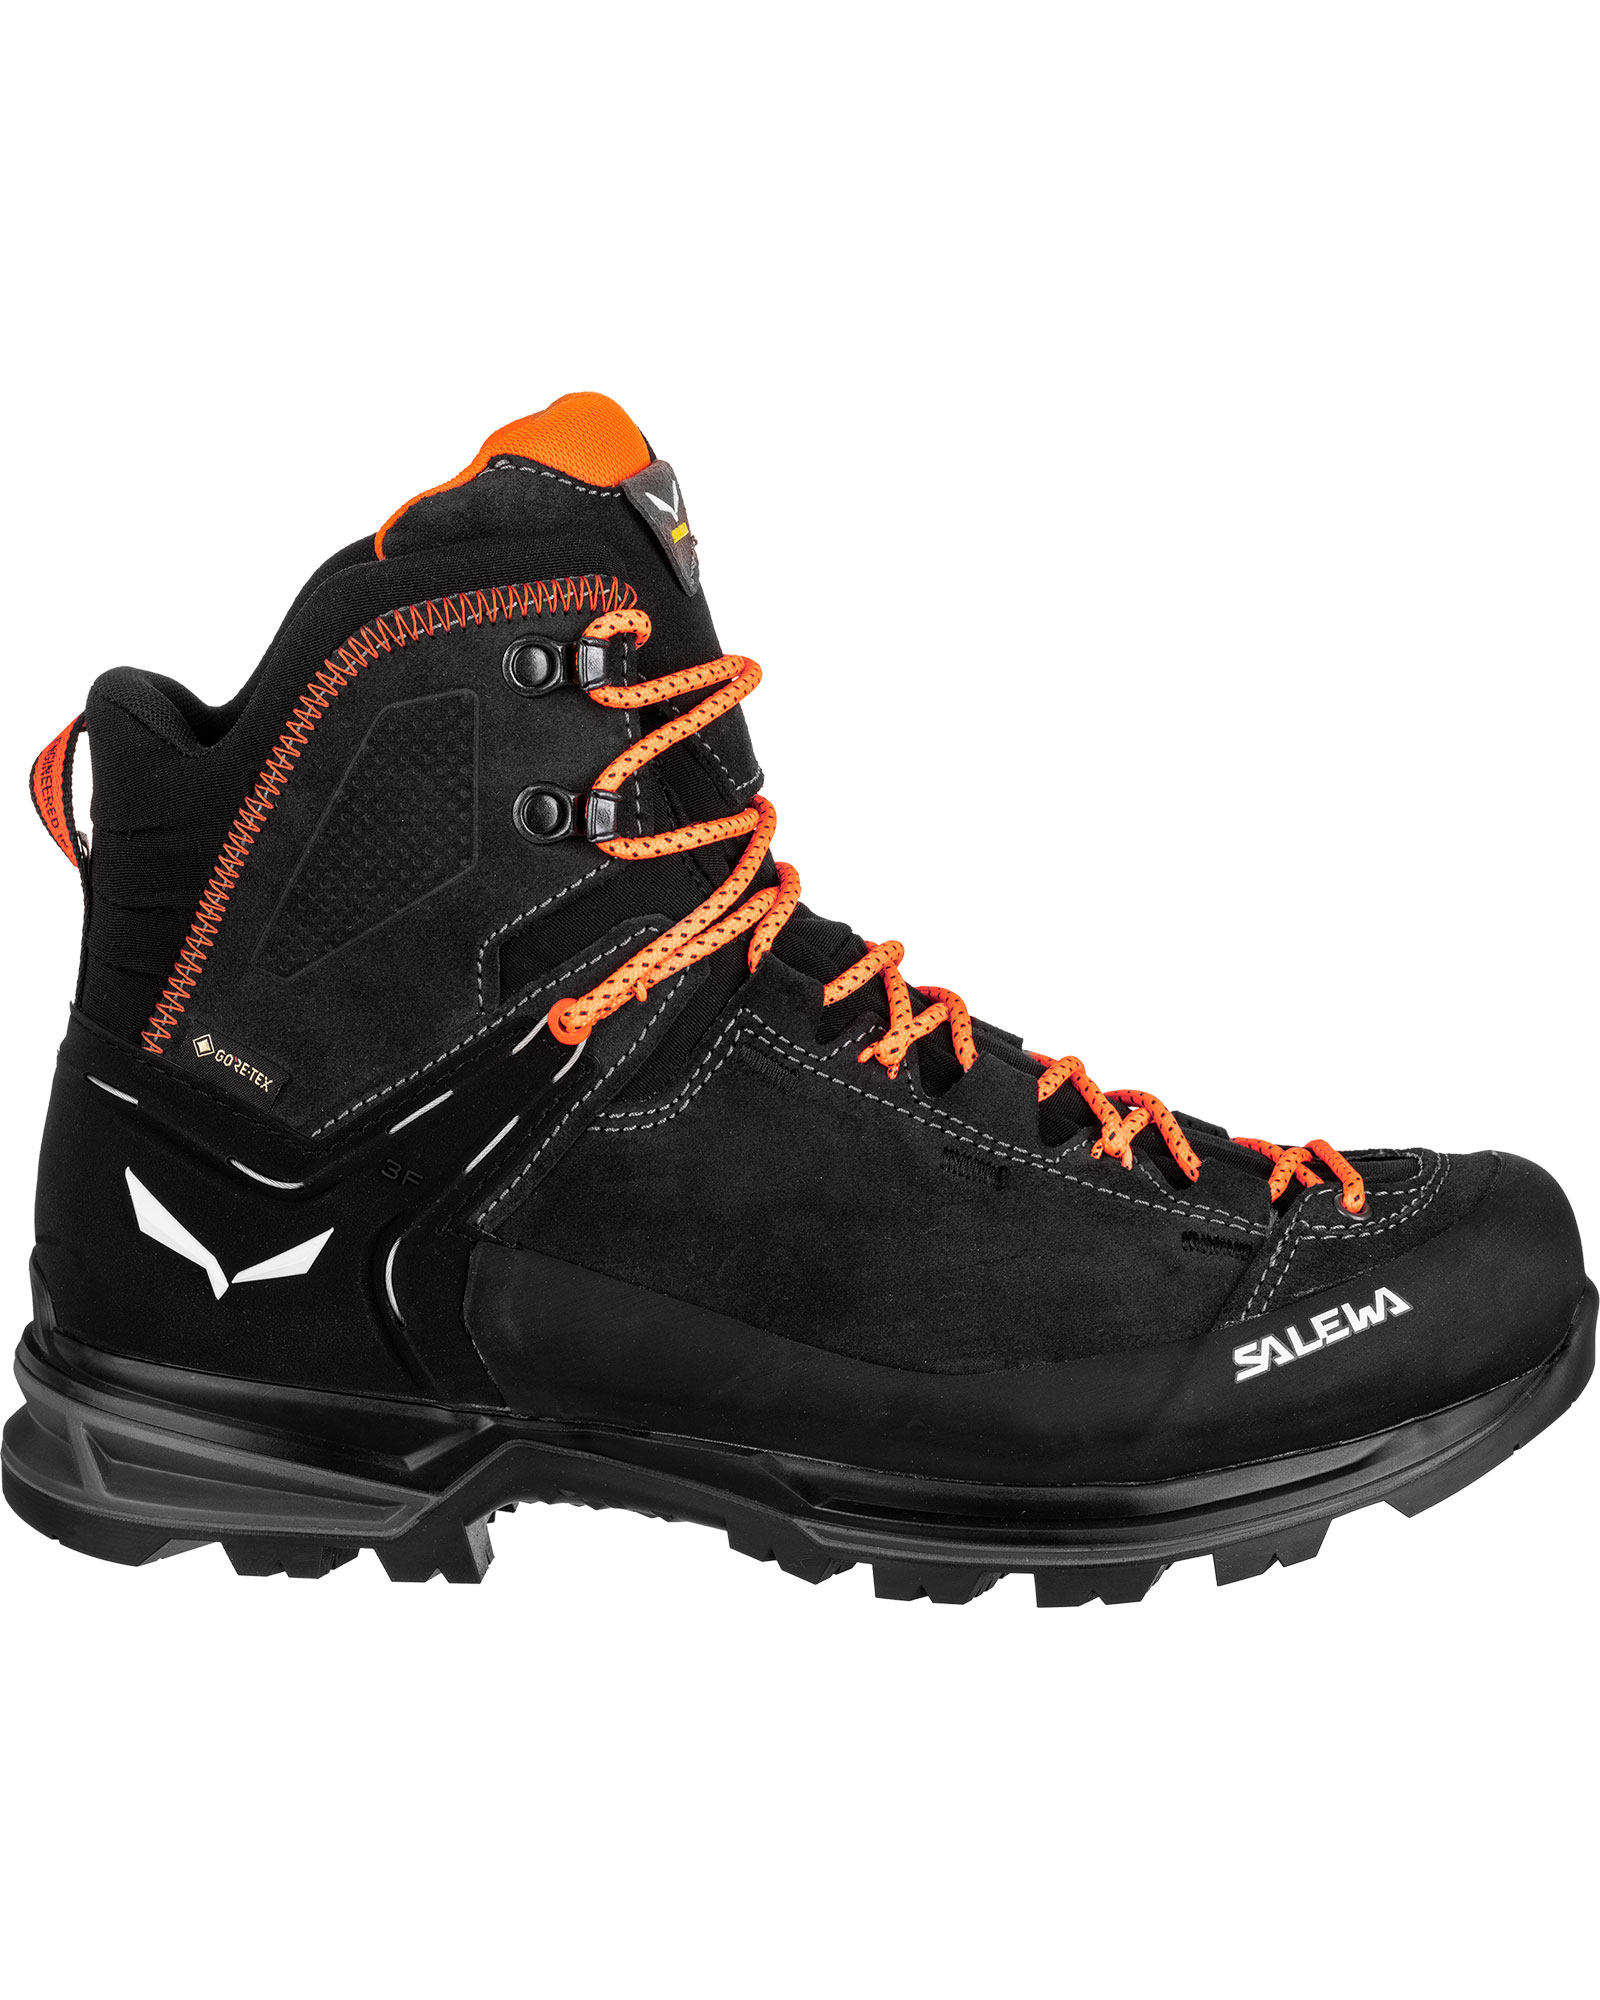 Salewa Mountain Trainer 2 Mid GORE TEX Men’s Boots - Onyx UK 7.5